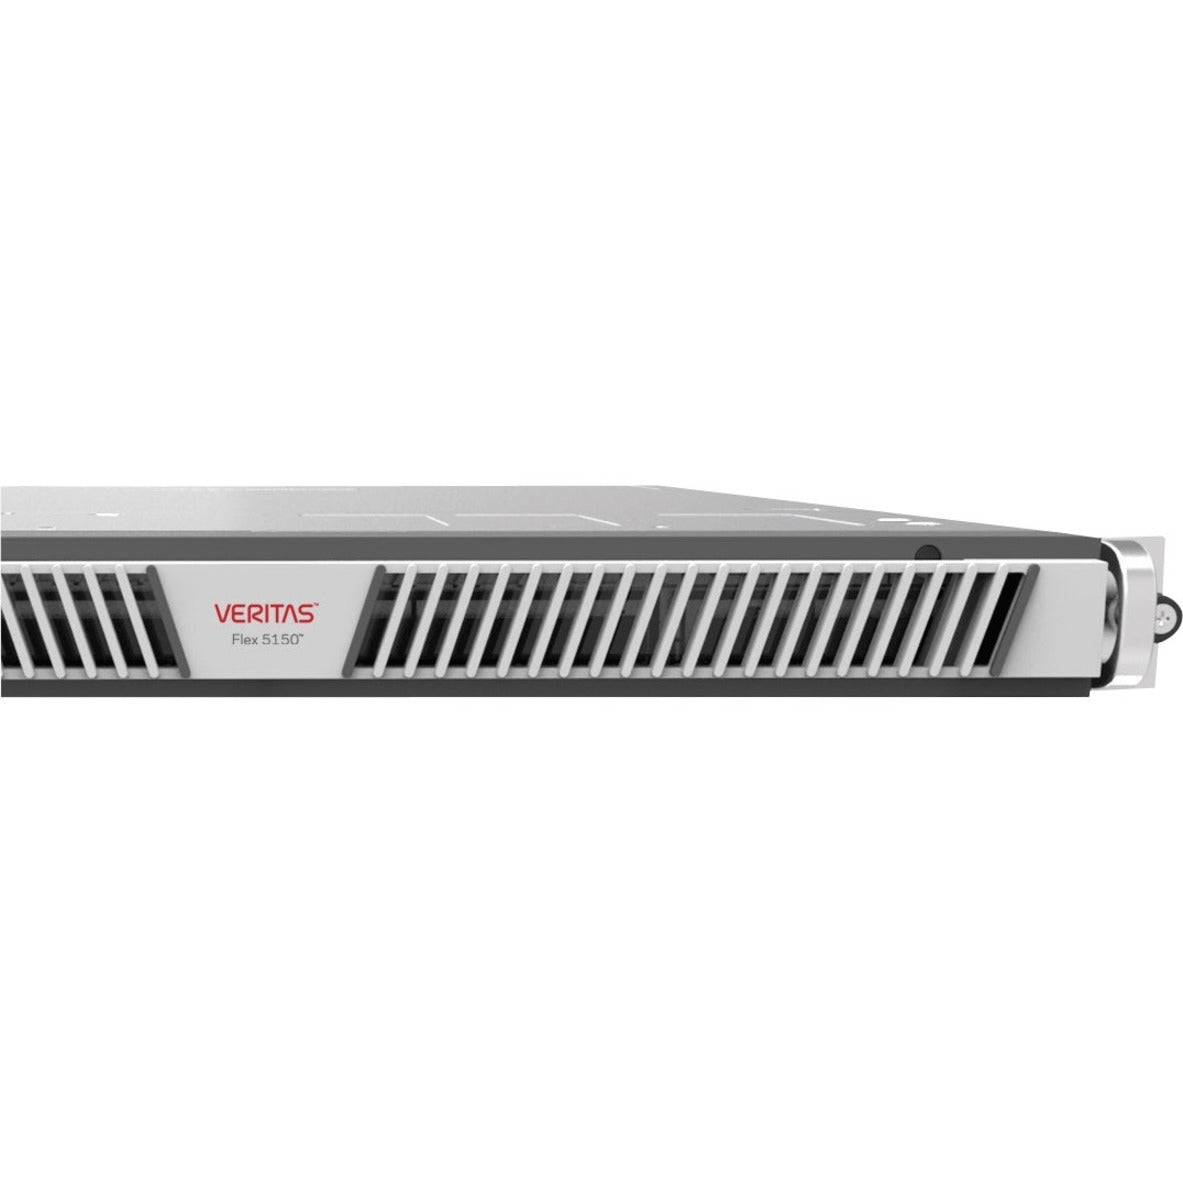 Veritas 26117-M0008 Flex System 5150 NAS Storage System, 15TB Total Hard Drive Capacity Installed, 12Gb/s SAS Controller, 6 Network (RJ-45) Ports